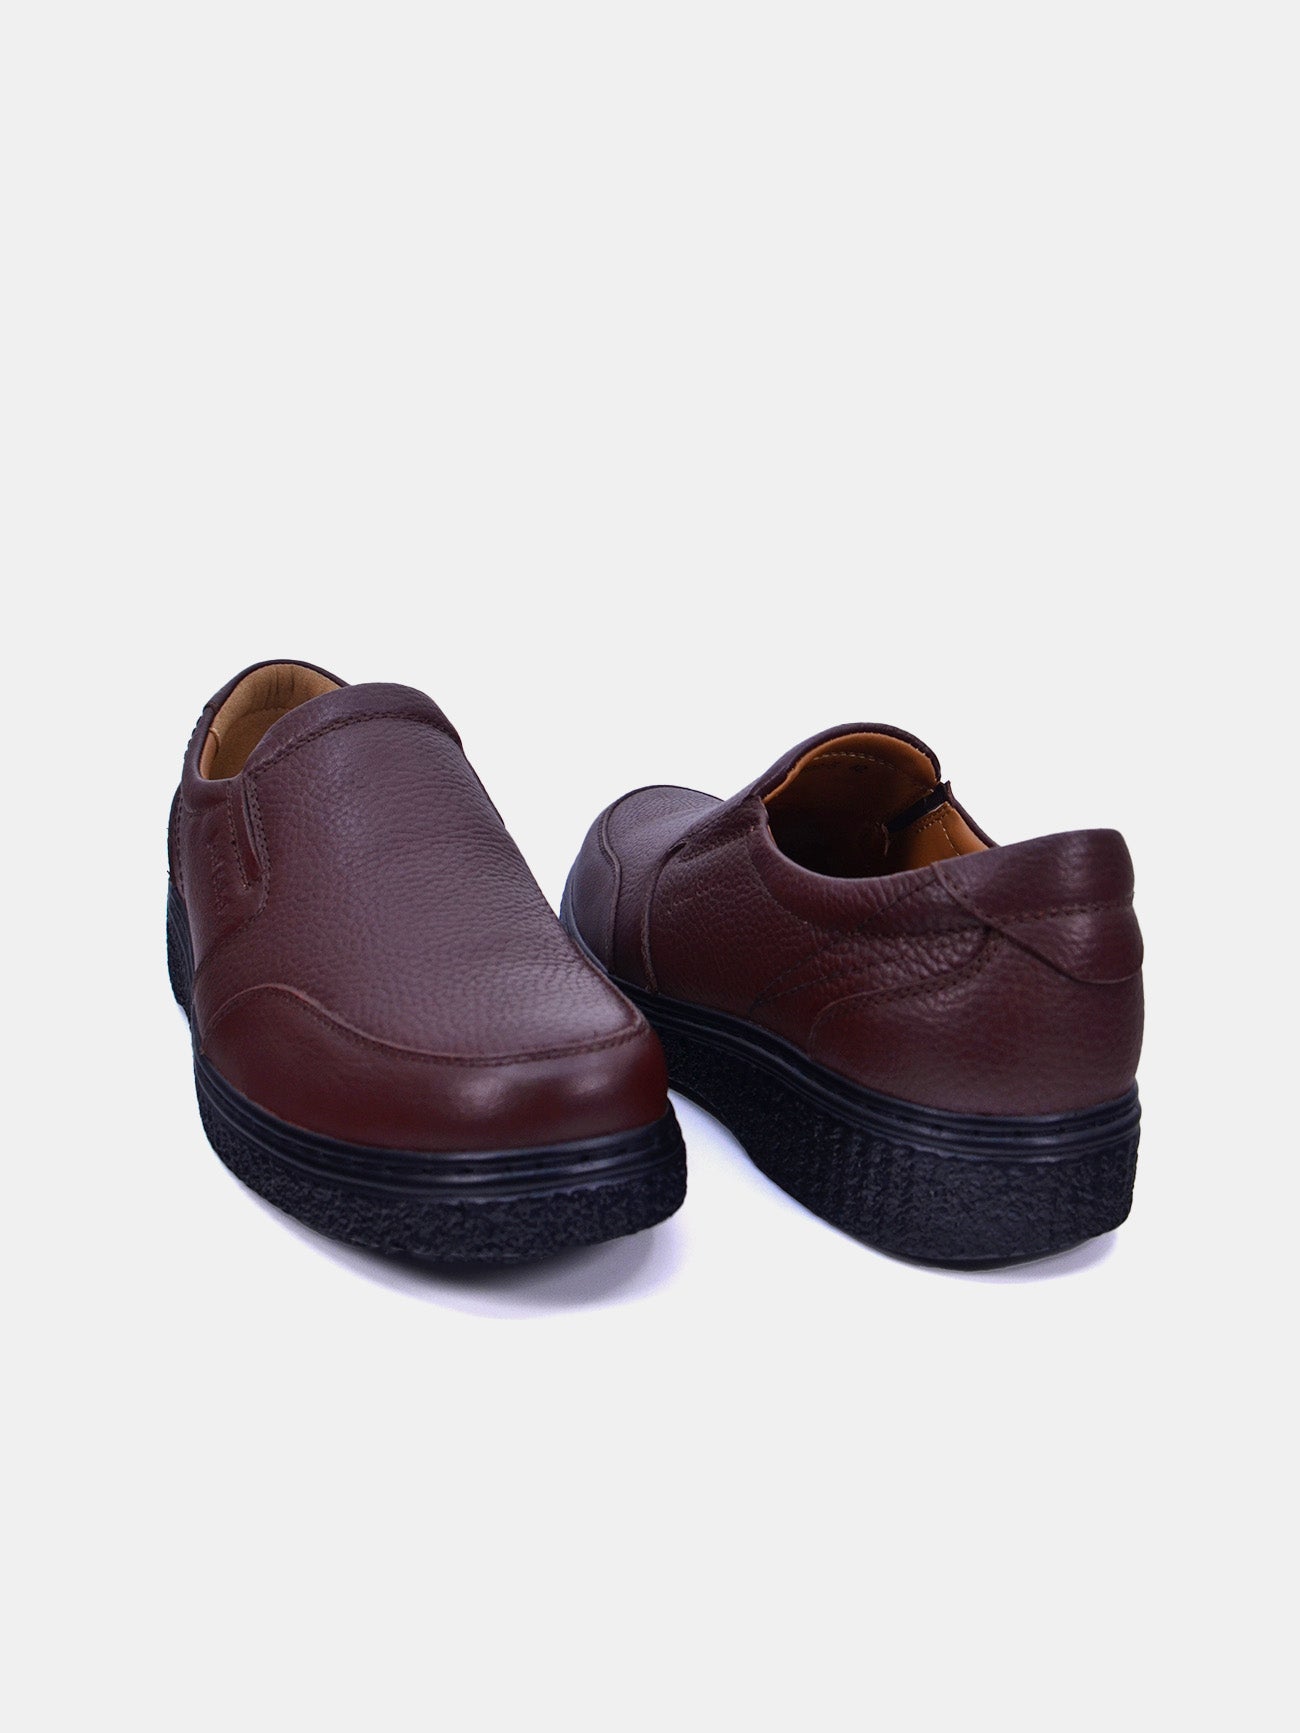 Josef Seibel 6198-5 Men's Slip On Shoes